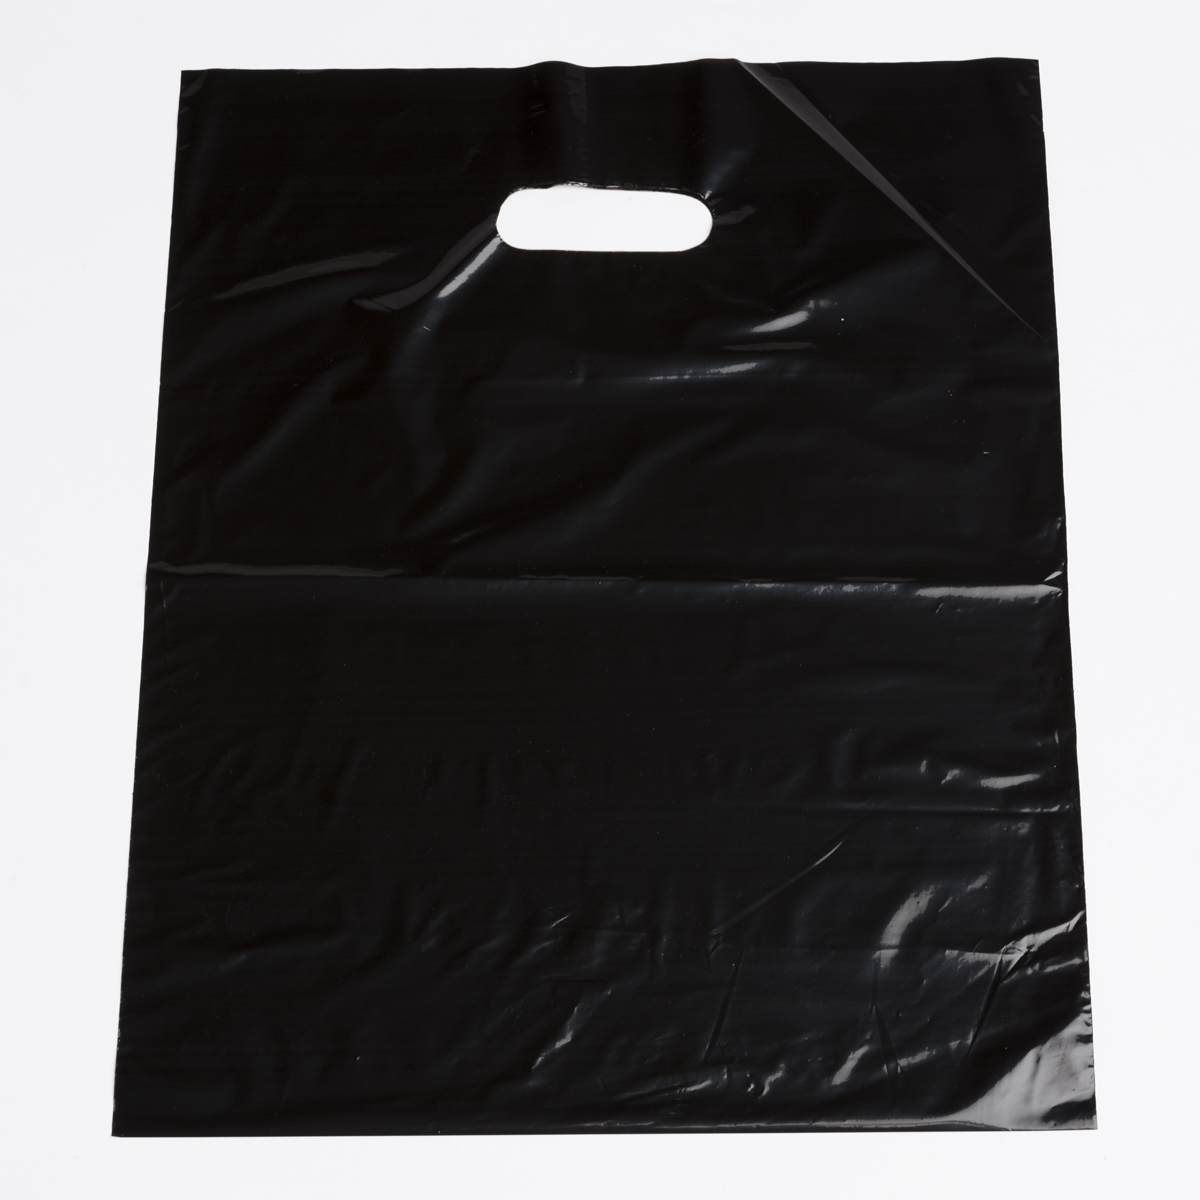 12×15 Black Plastic Bags (1,000 pcs.)